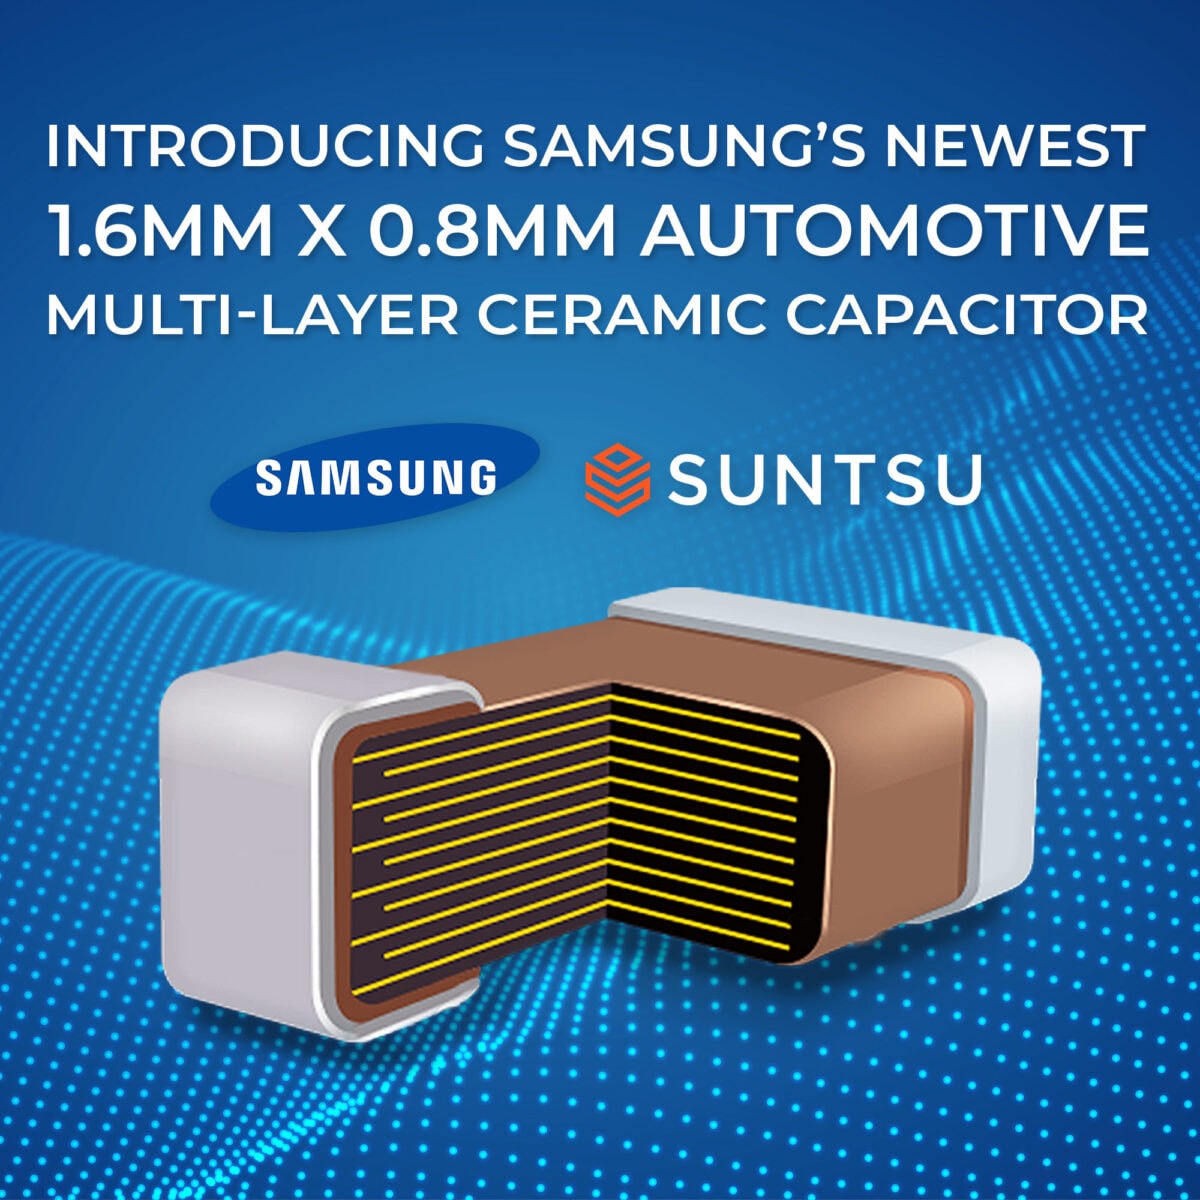 Samsung Electro-Mechanics’ Newest Automotive MLCC Begins Mass Production